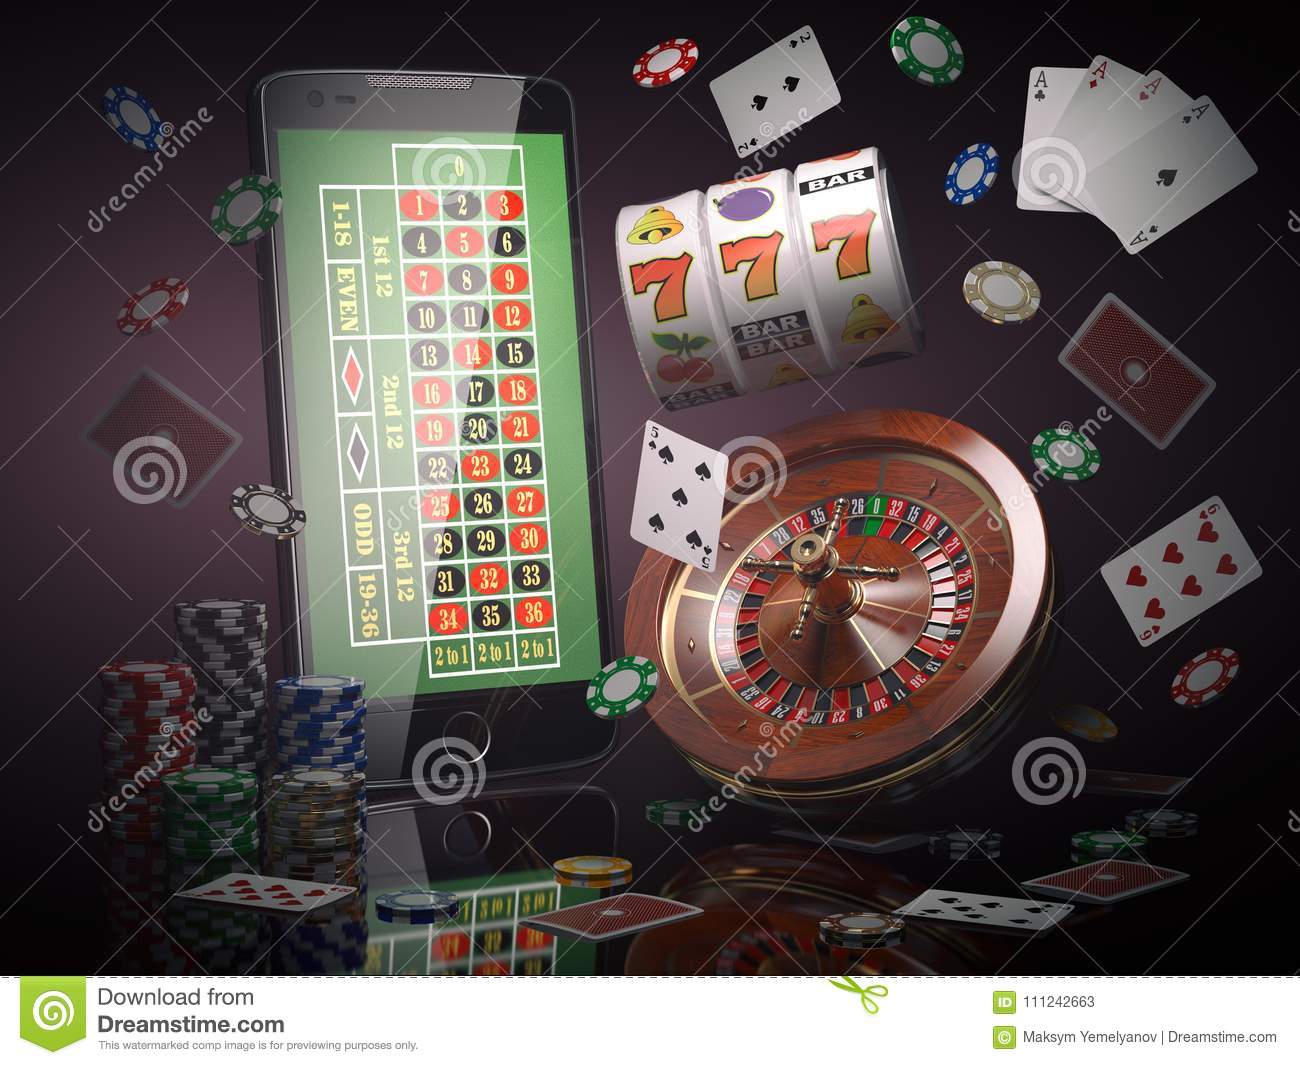 Gametwist casino gratis